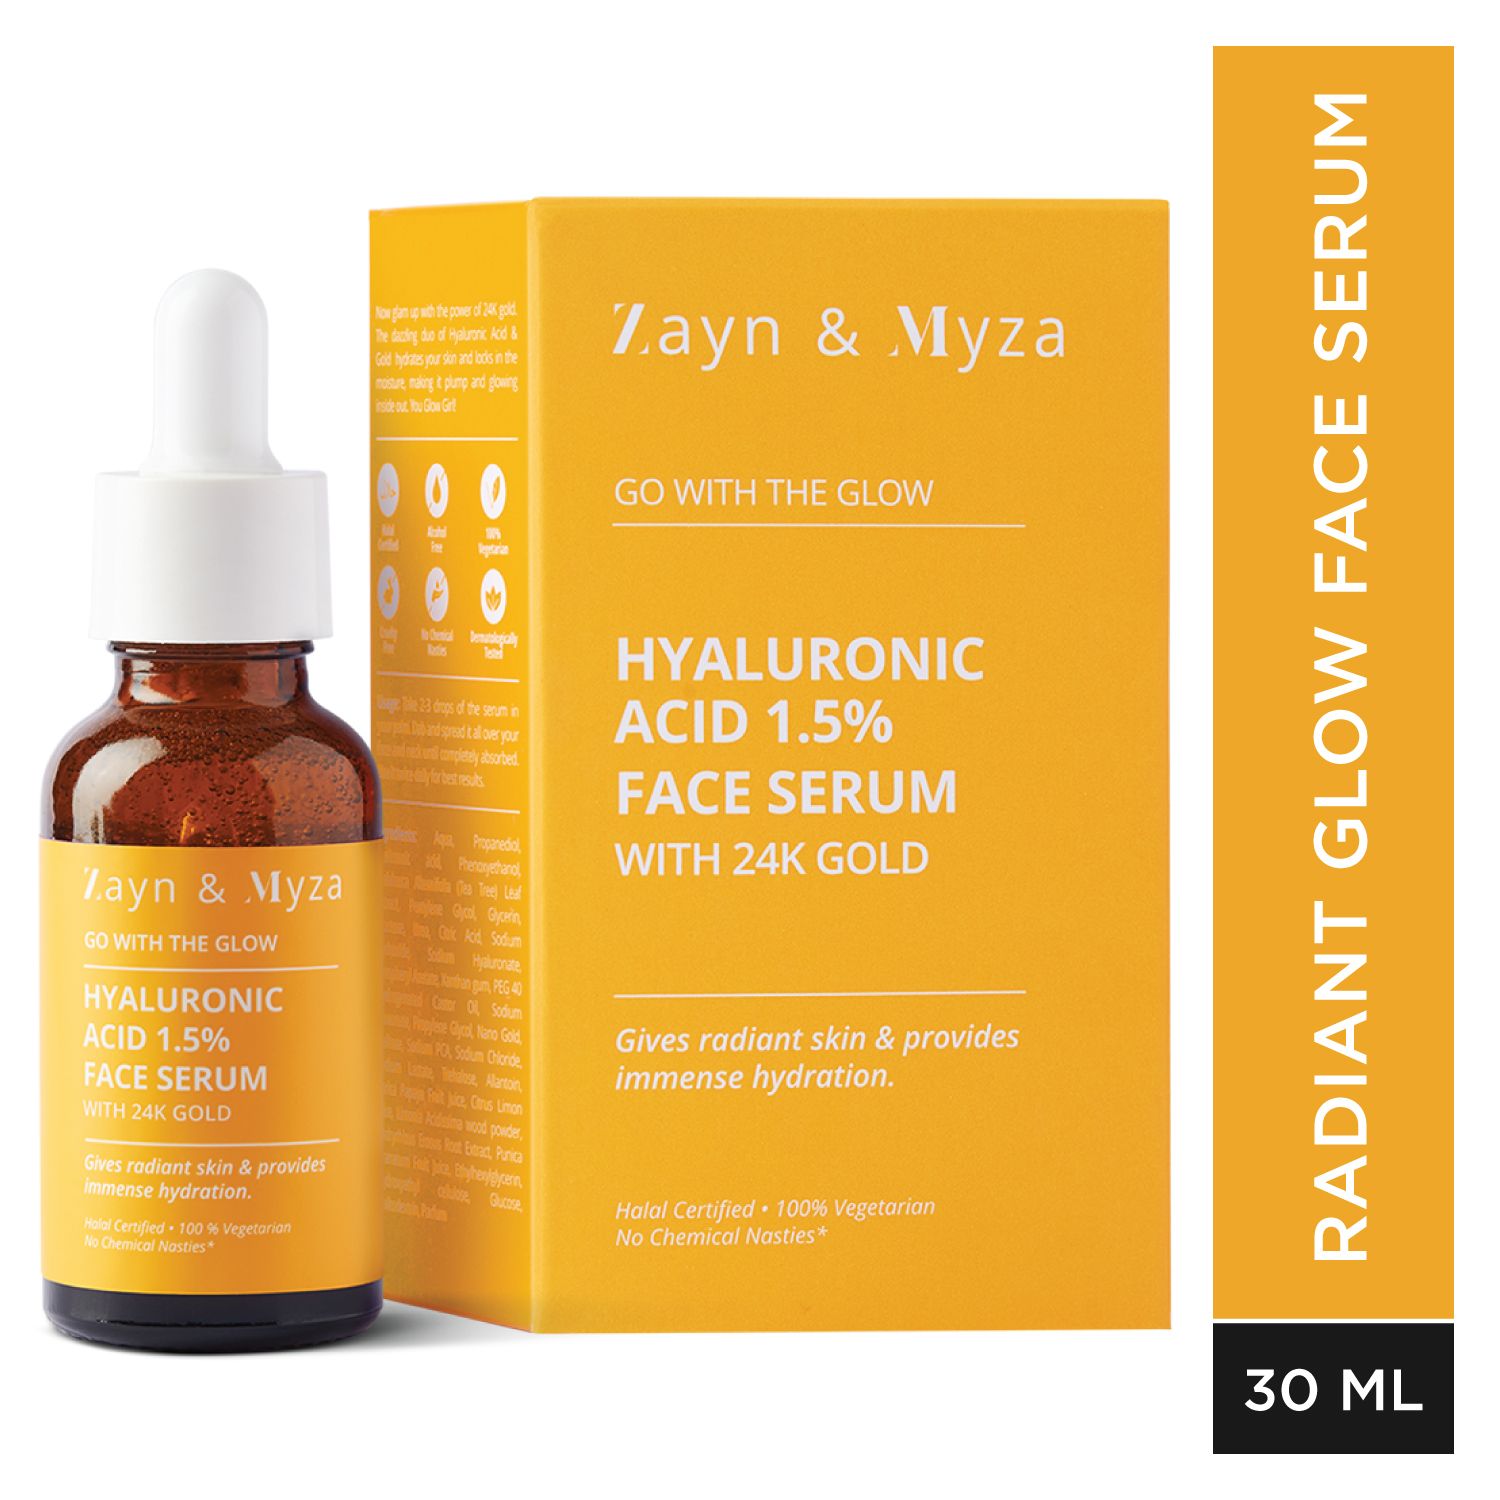 Zayn & Myza Hyaluronic Acid 1.5% Face Serum